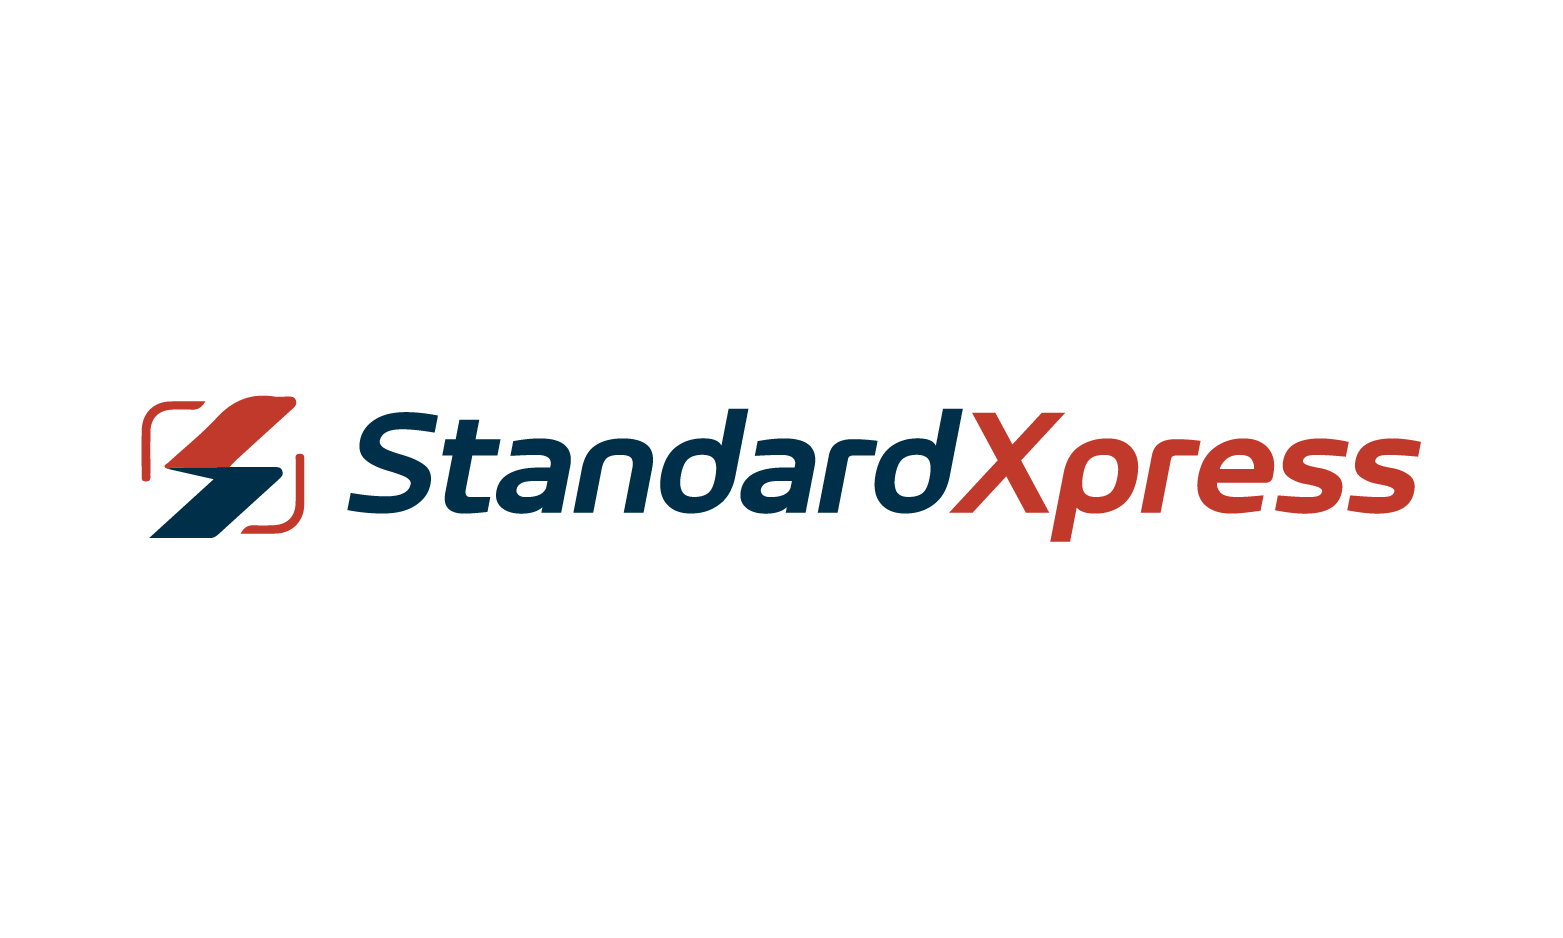 StandardXpress.com - Creative brandable domain for sale